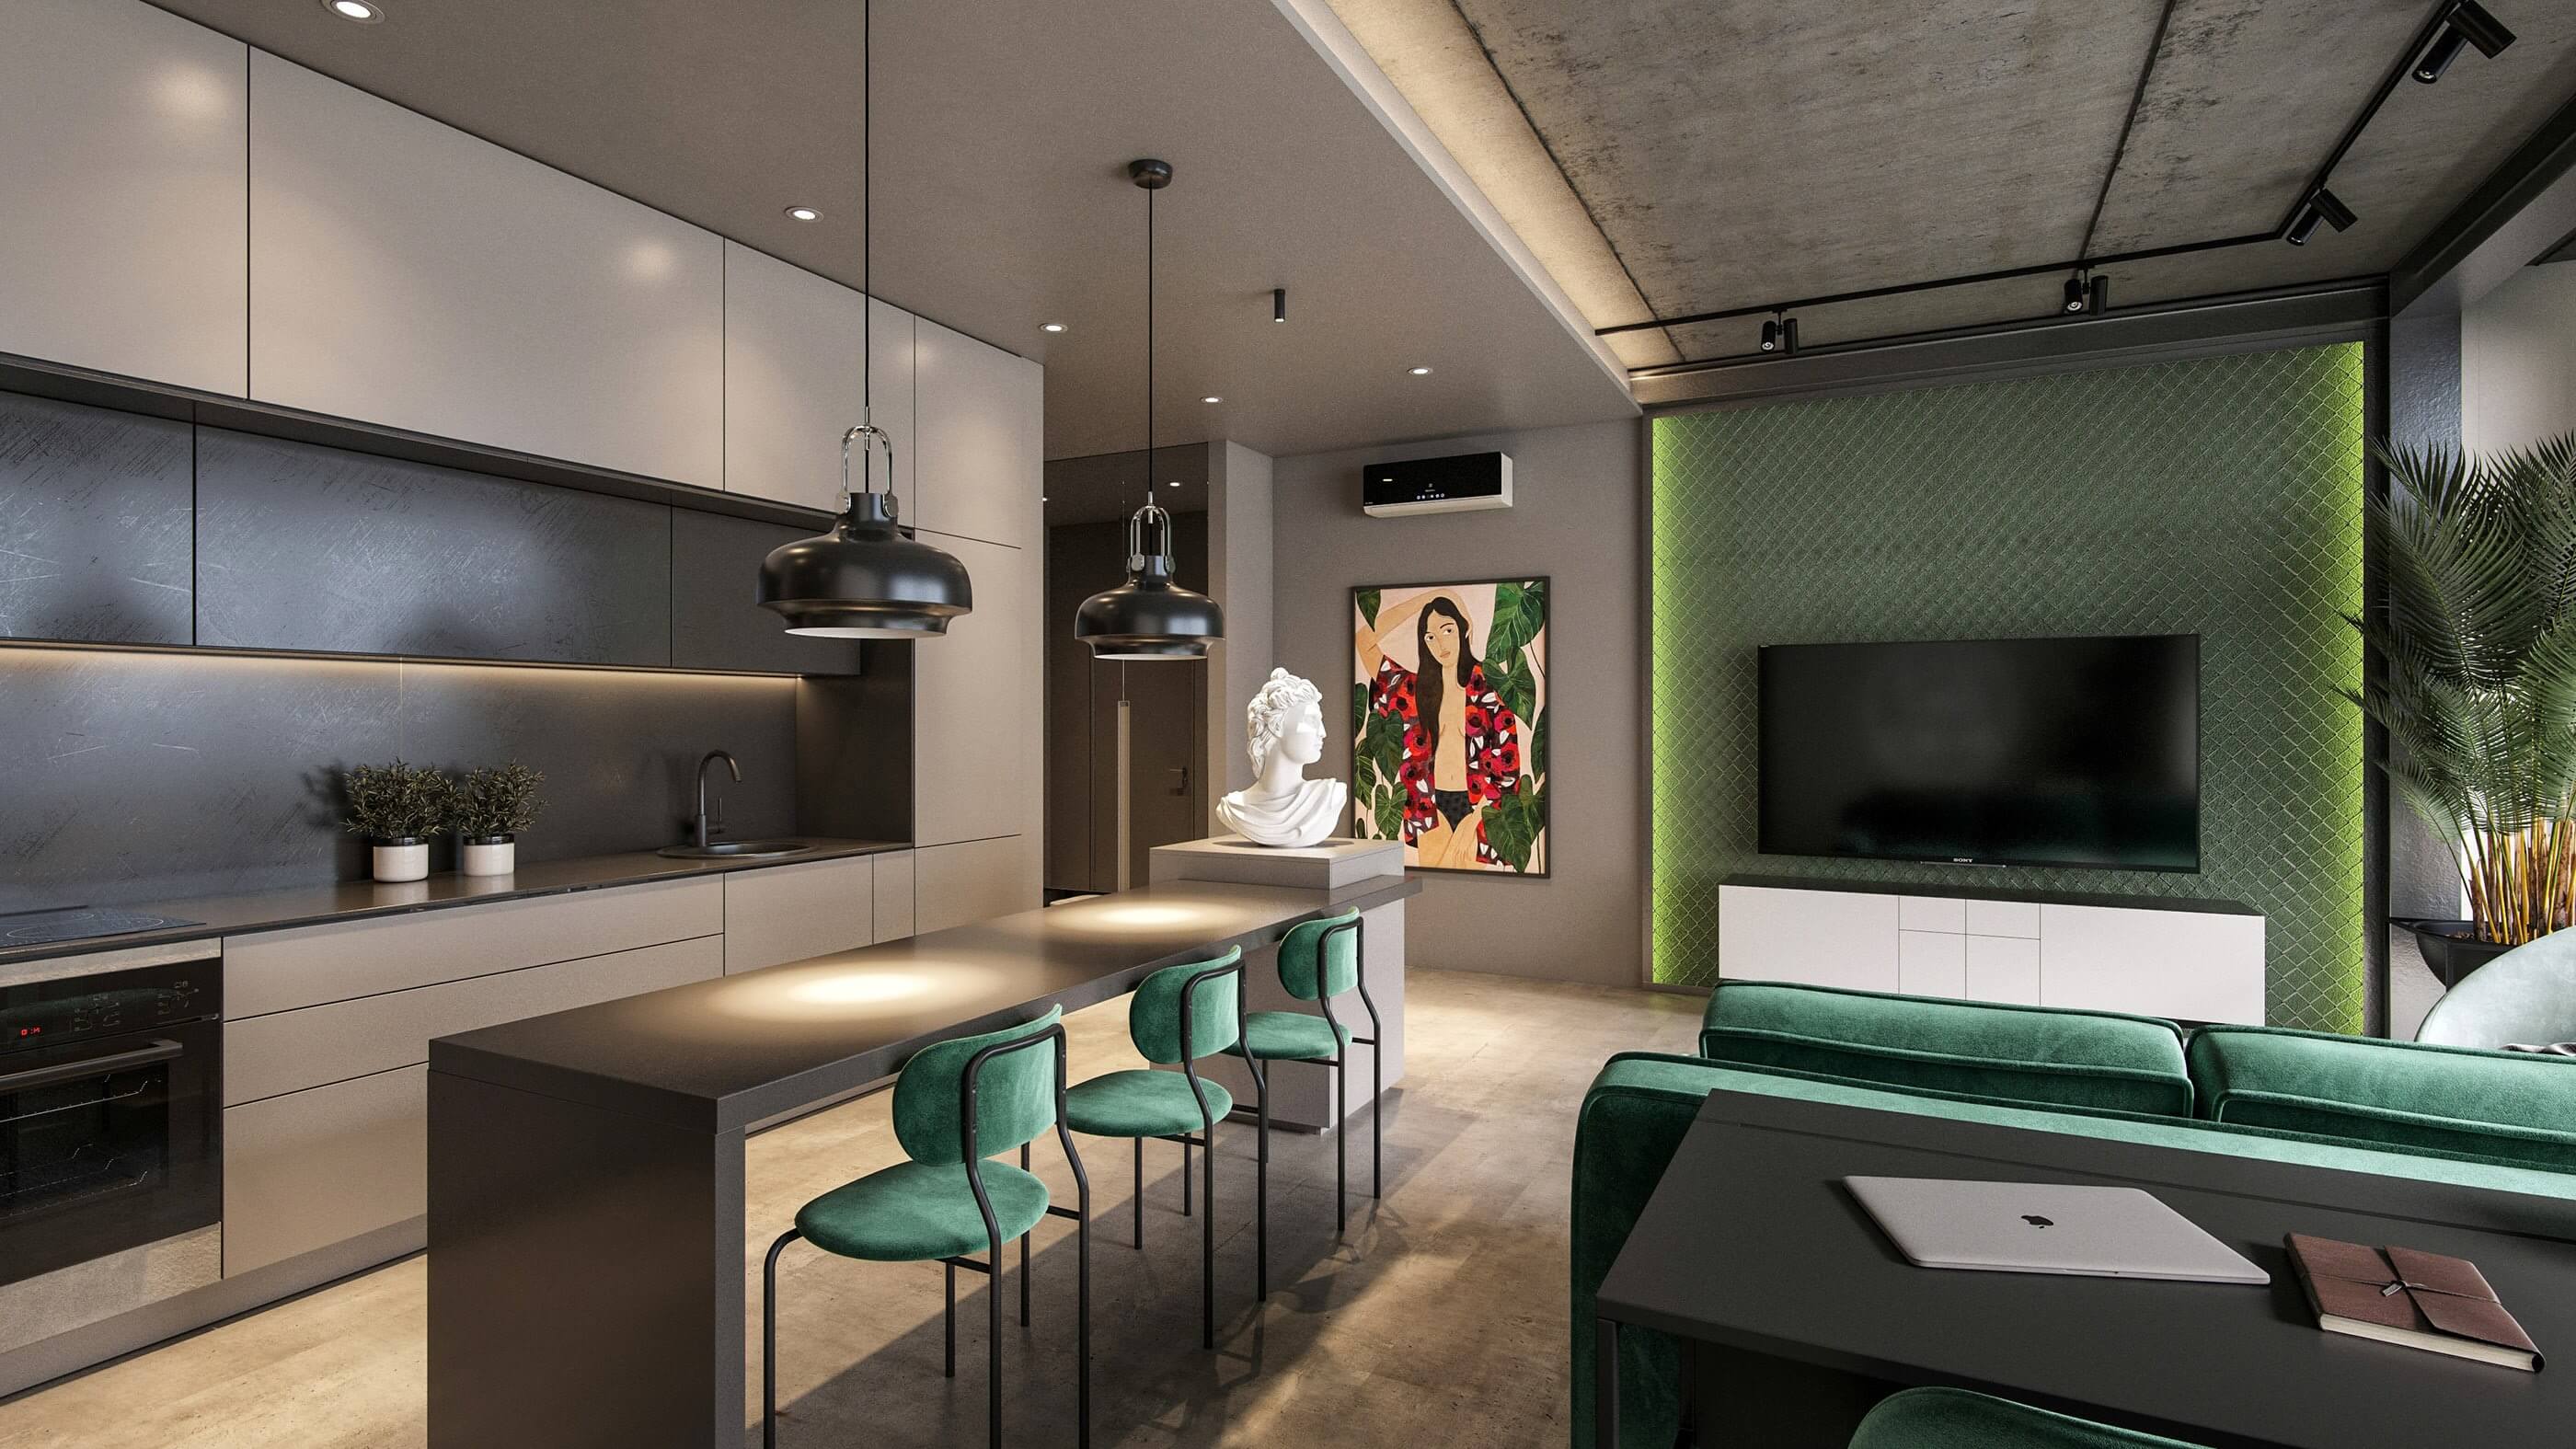 Jungle paradise apartment kitchen design block green couch - cgi visualization